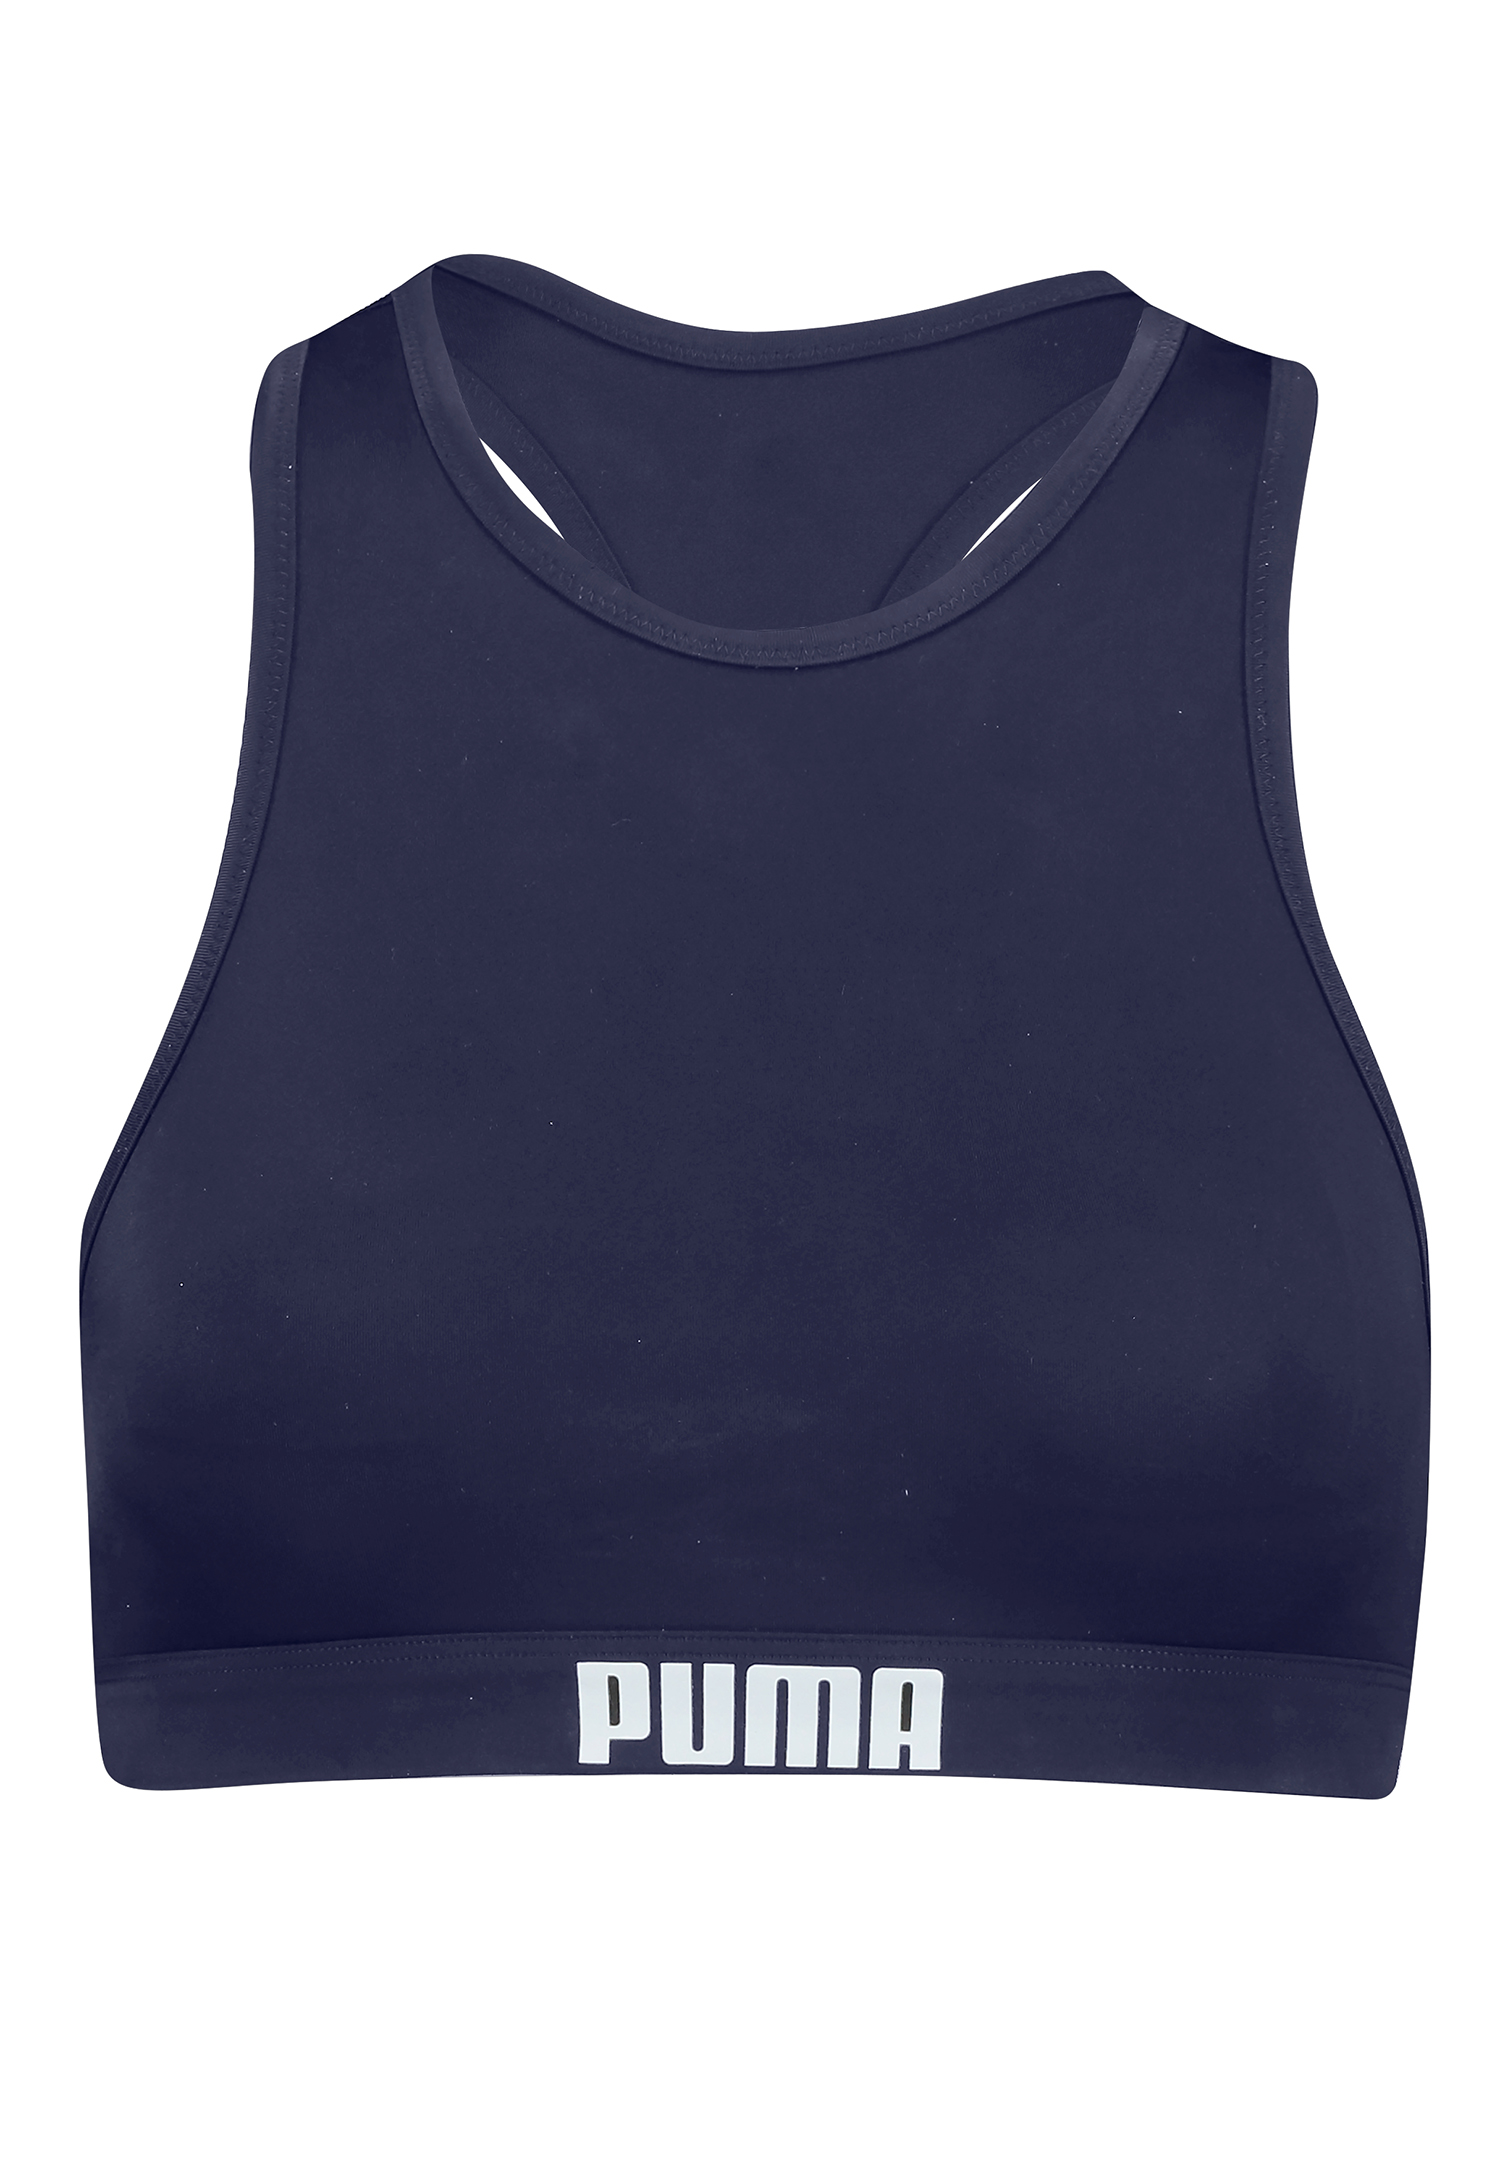 Купальник Puma SWIM WOMEN RACERBACK TOP, темно синий цена и фото